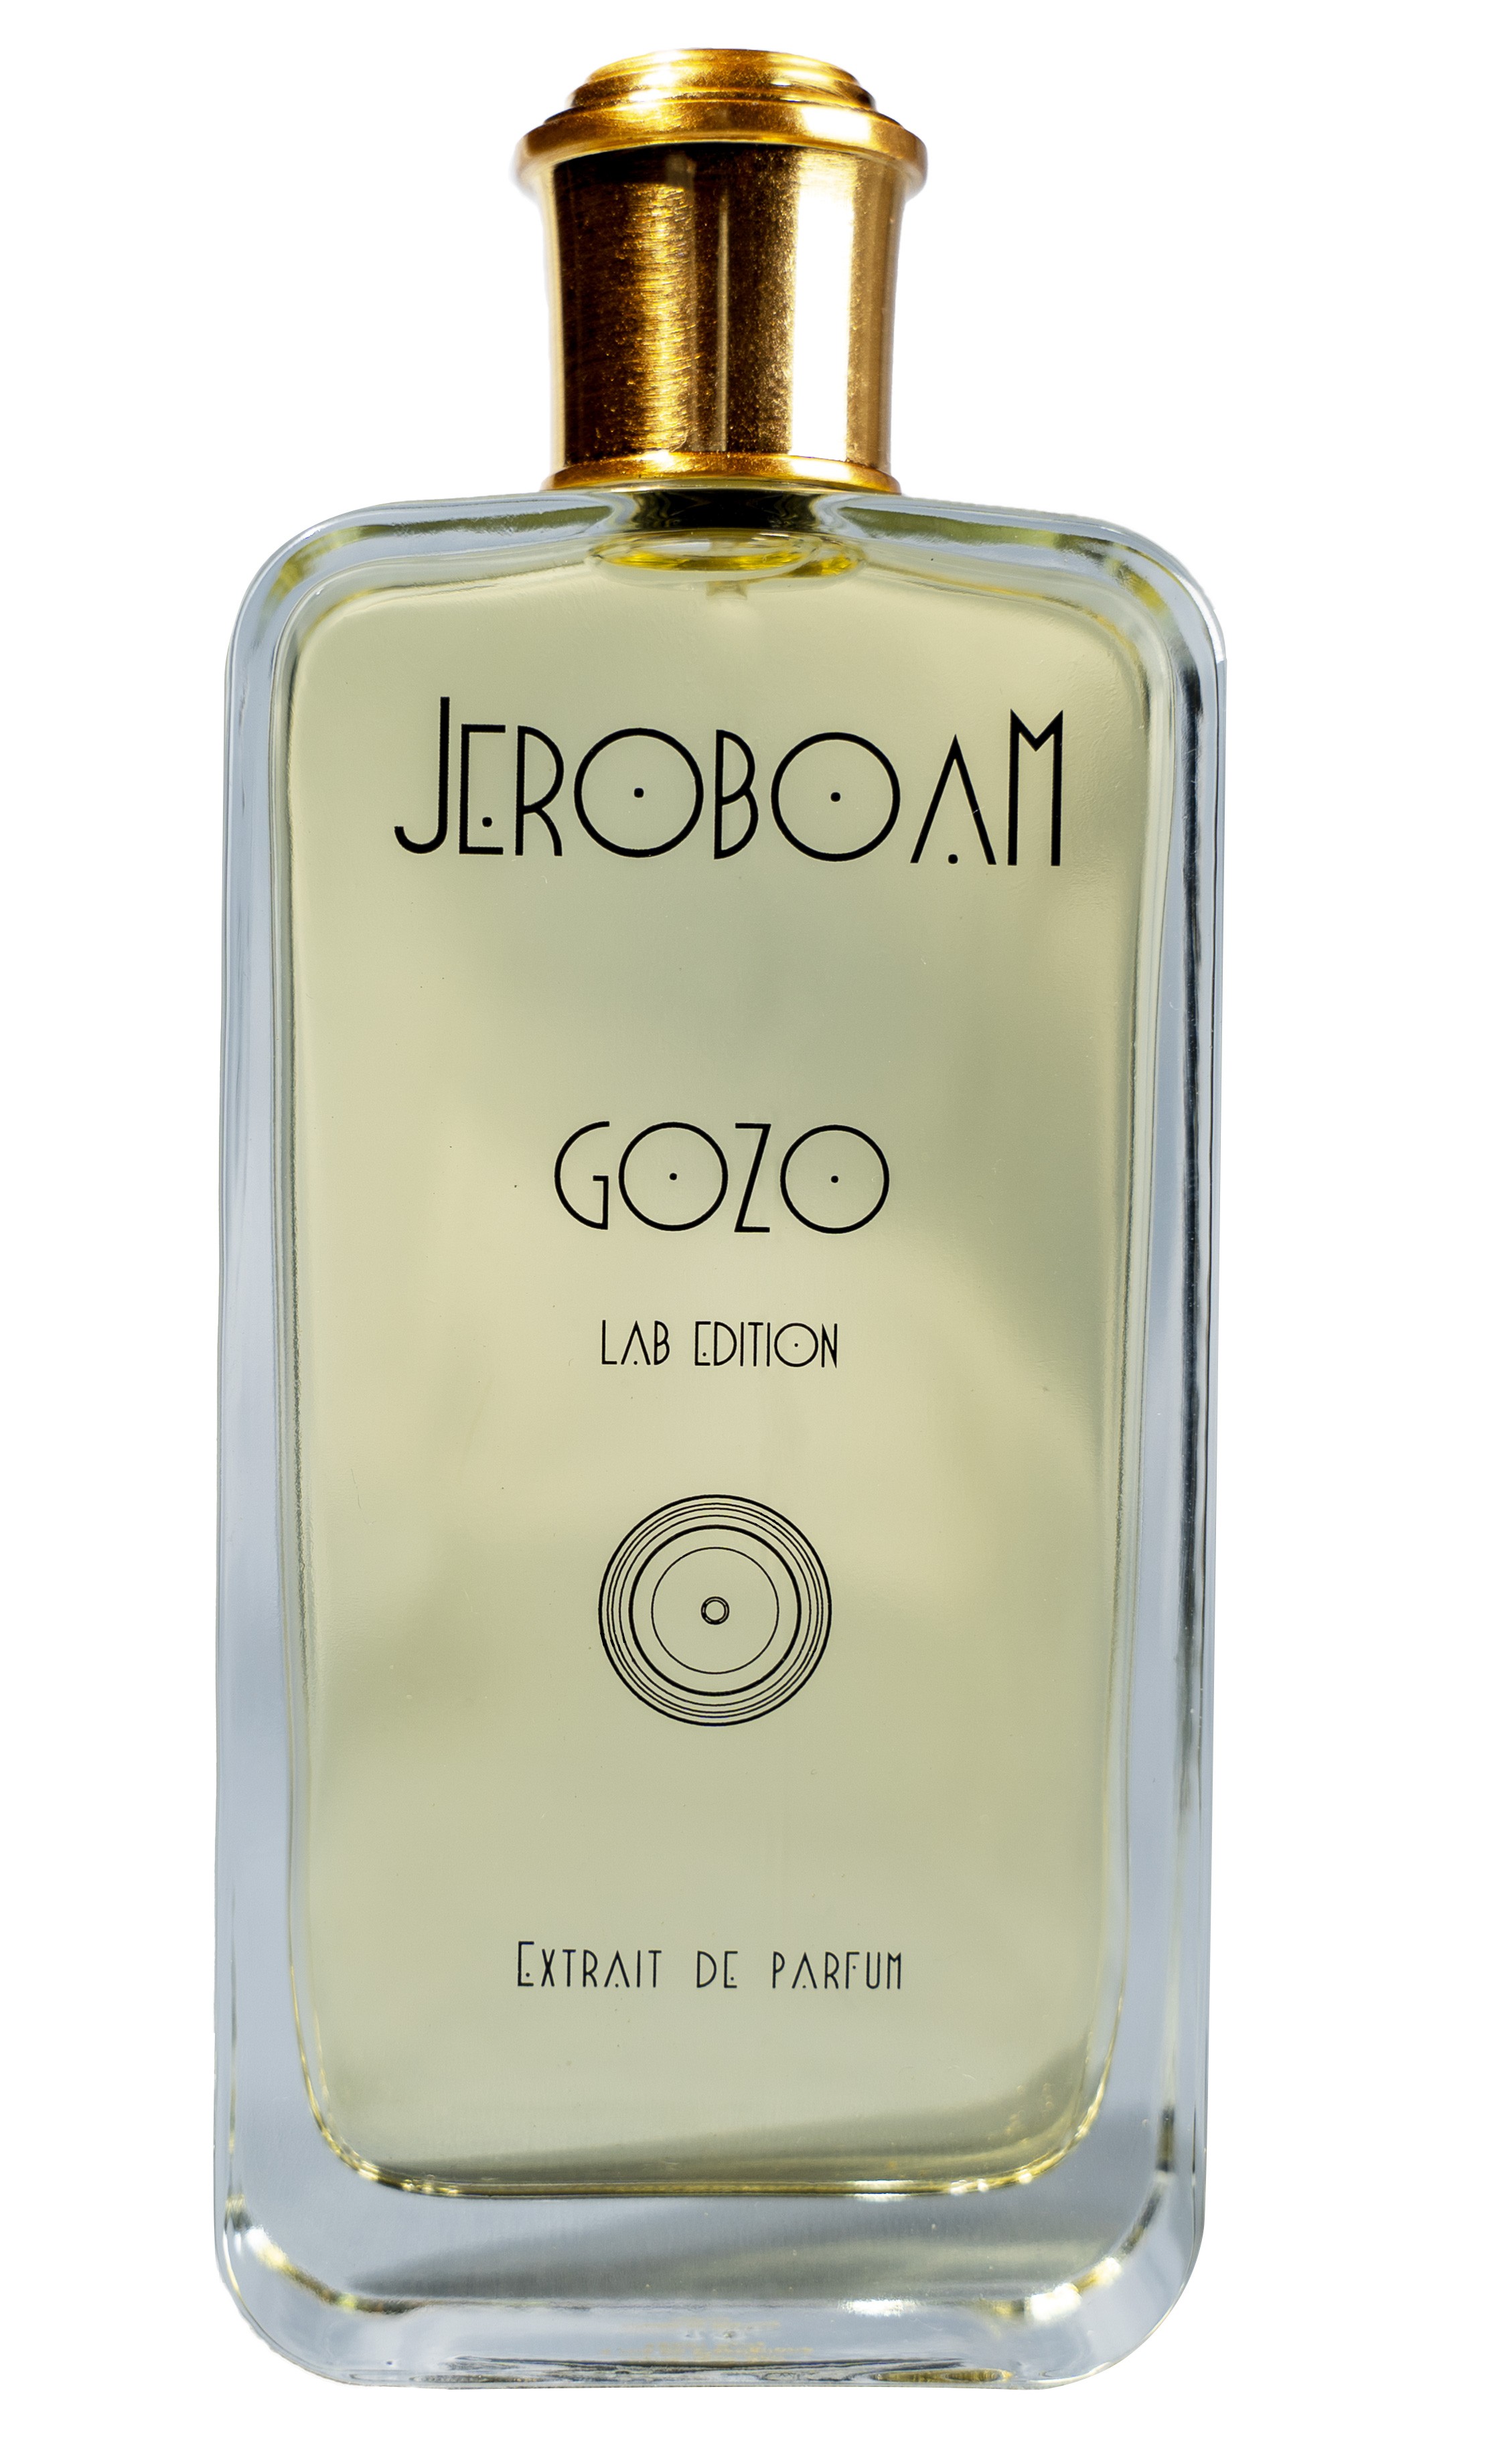 Jeroboam Gozo lab Edition Extrait De Parfum 100ml - bottiglia trasparente